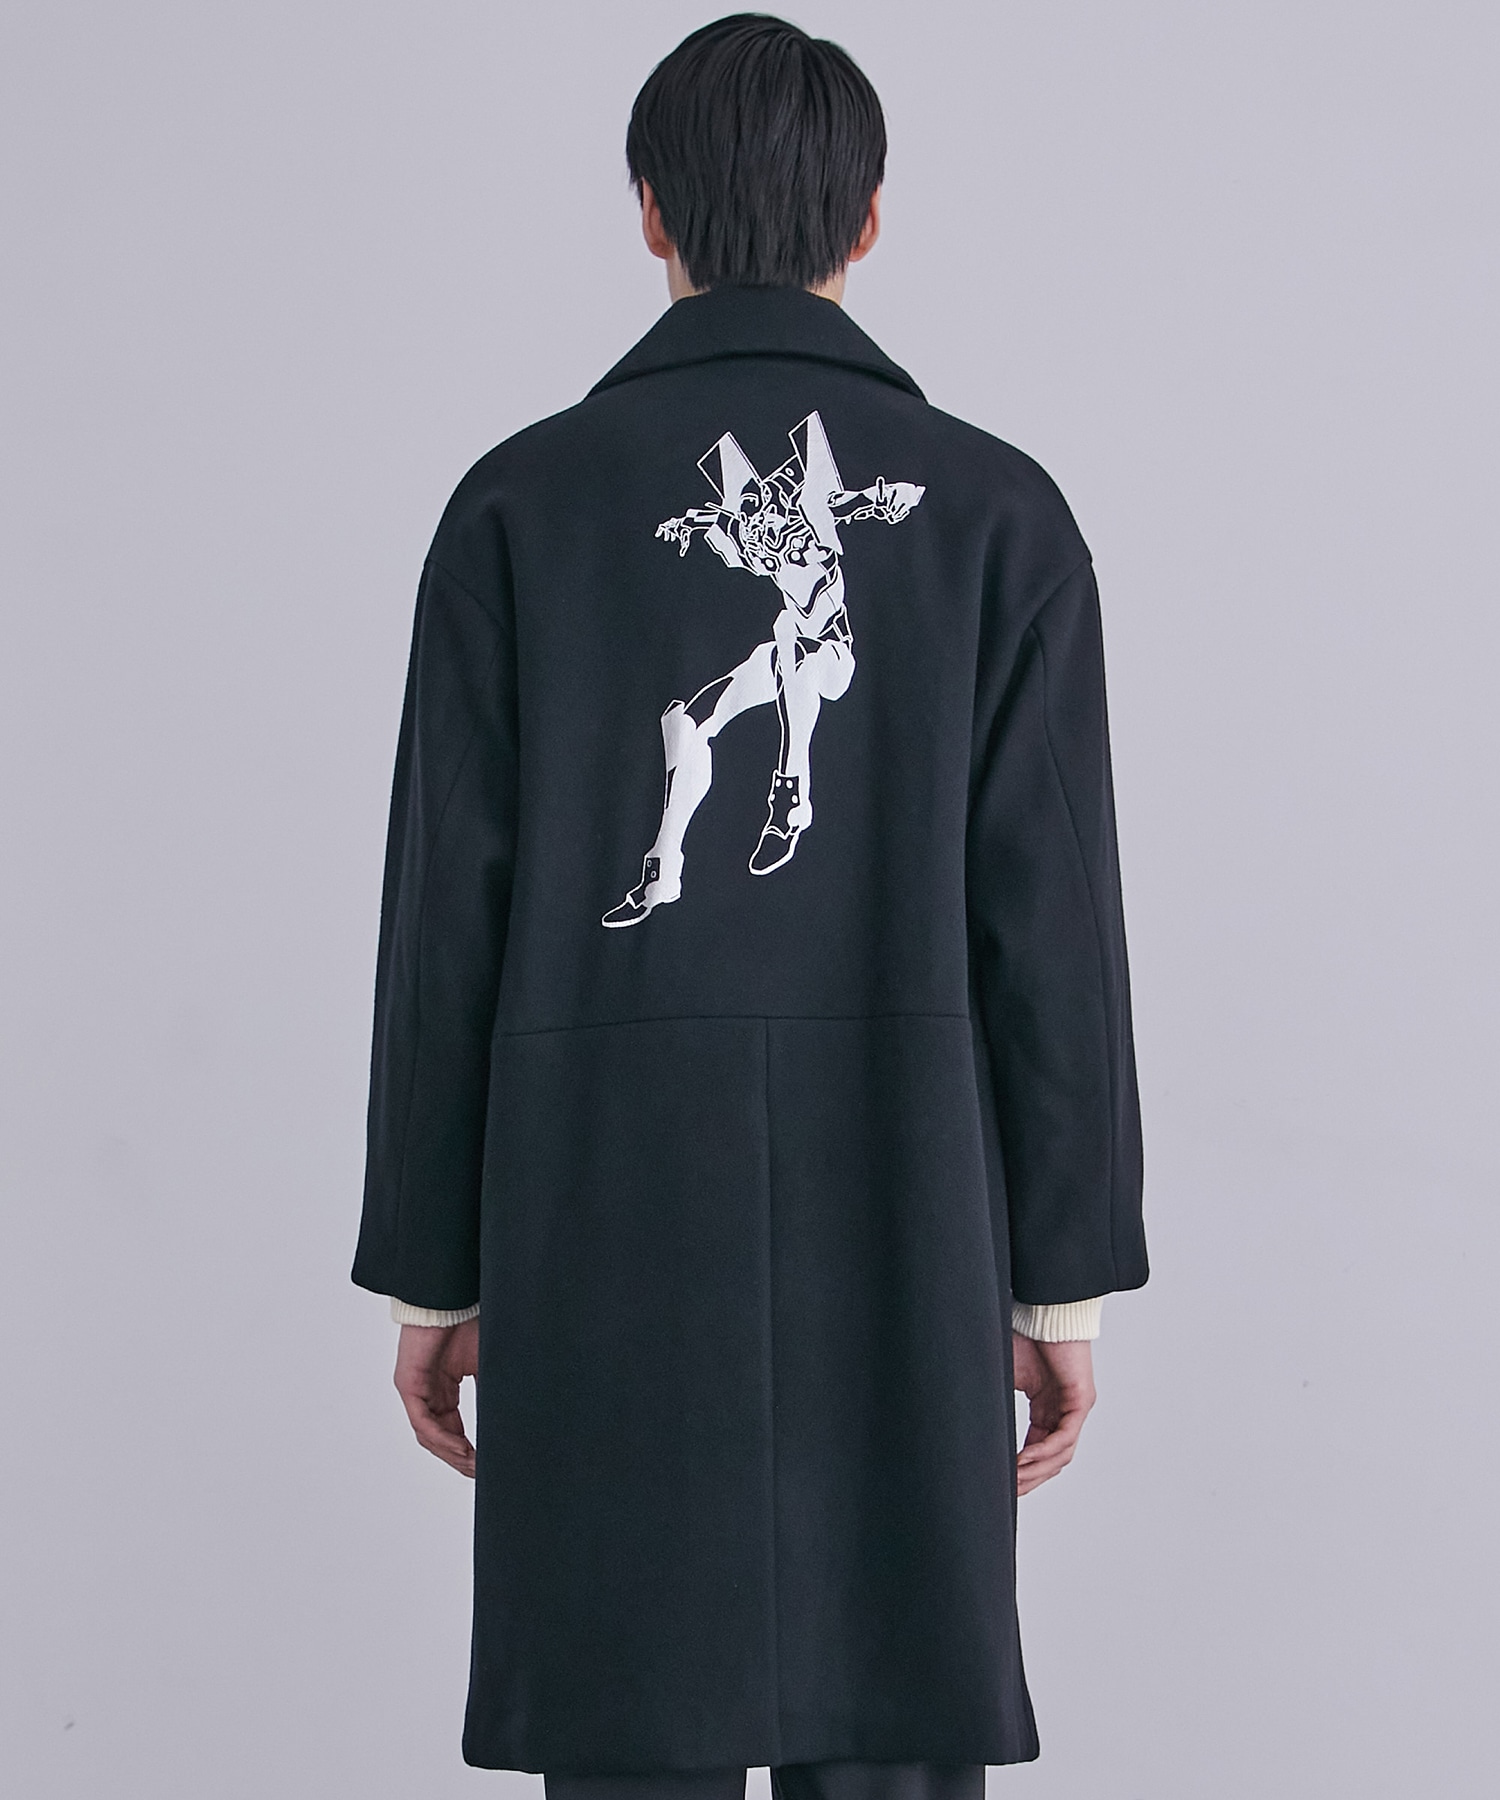 EVANGELION chesterfield coat(2 BLACK): : メンズ｜UNITED TOKYO 